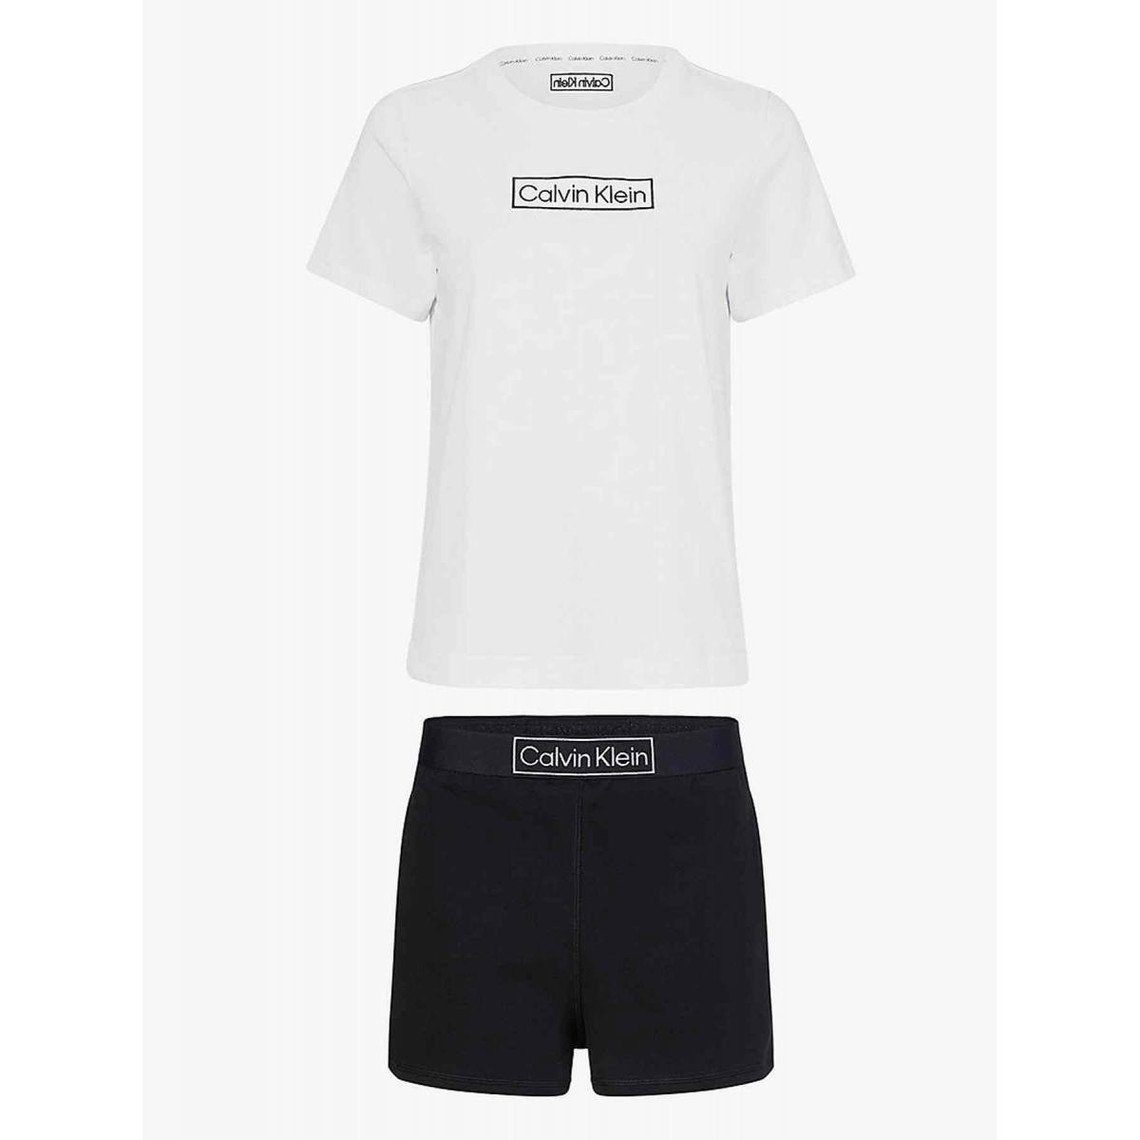 Ensemble pyjama top et short - Calvin Klein Underwear Noir en coton